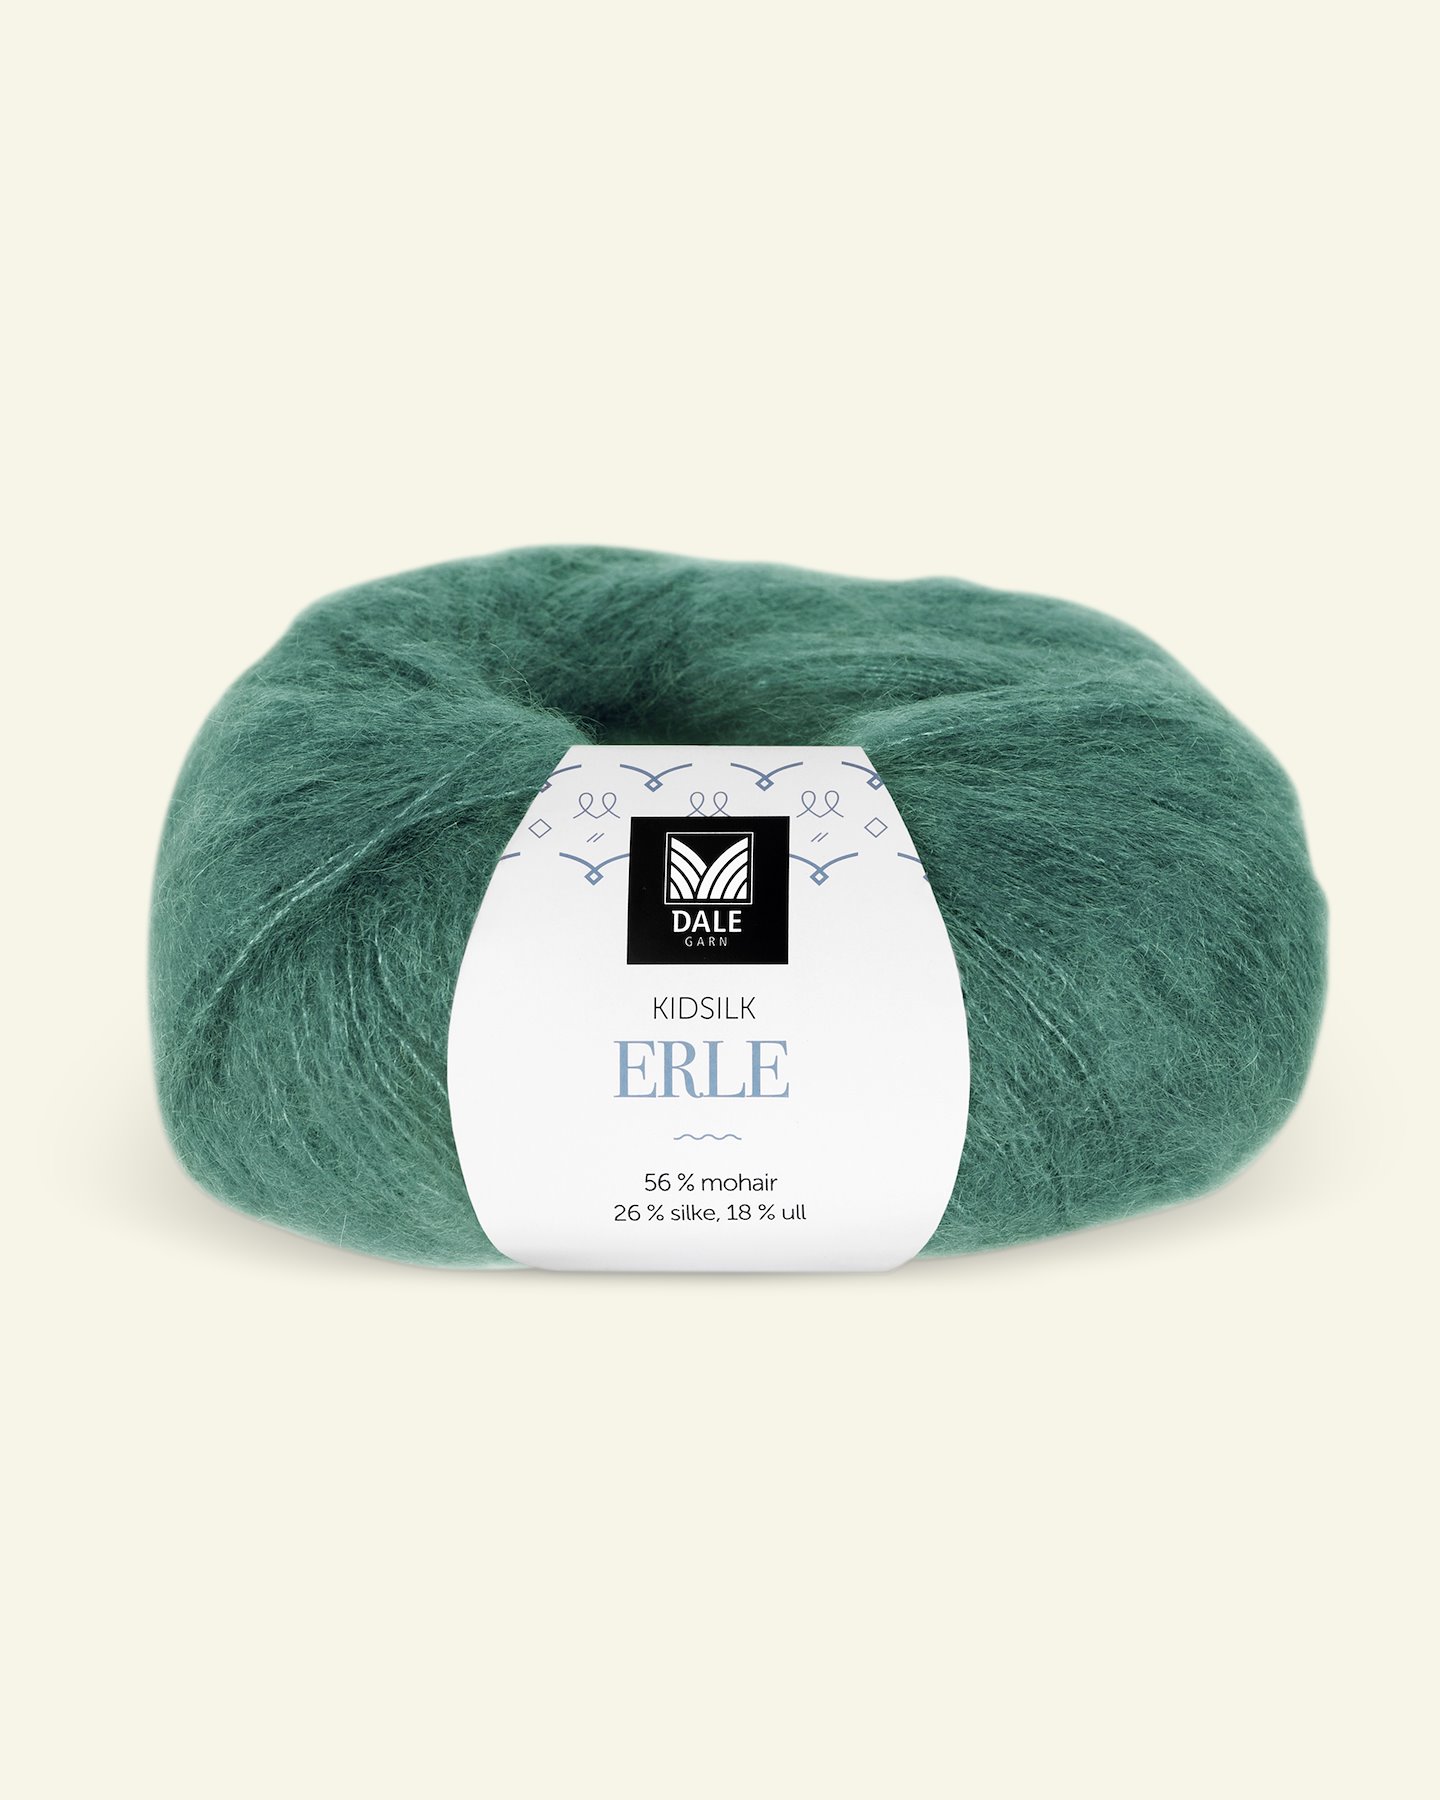 Dale Garn, silk mohair wool yarn "Kidsilk Erle", petrol (7872) 90000783_pack